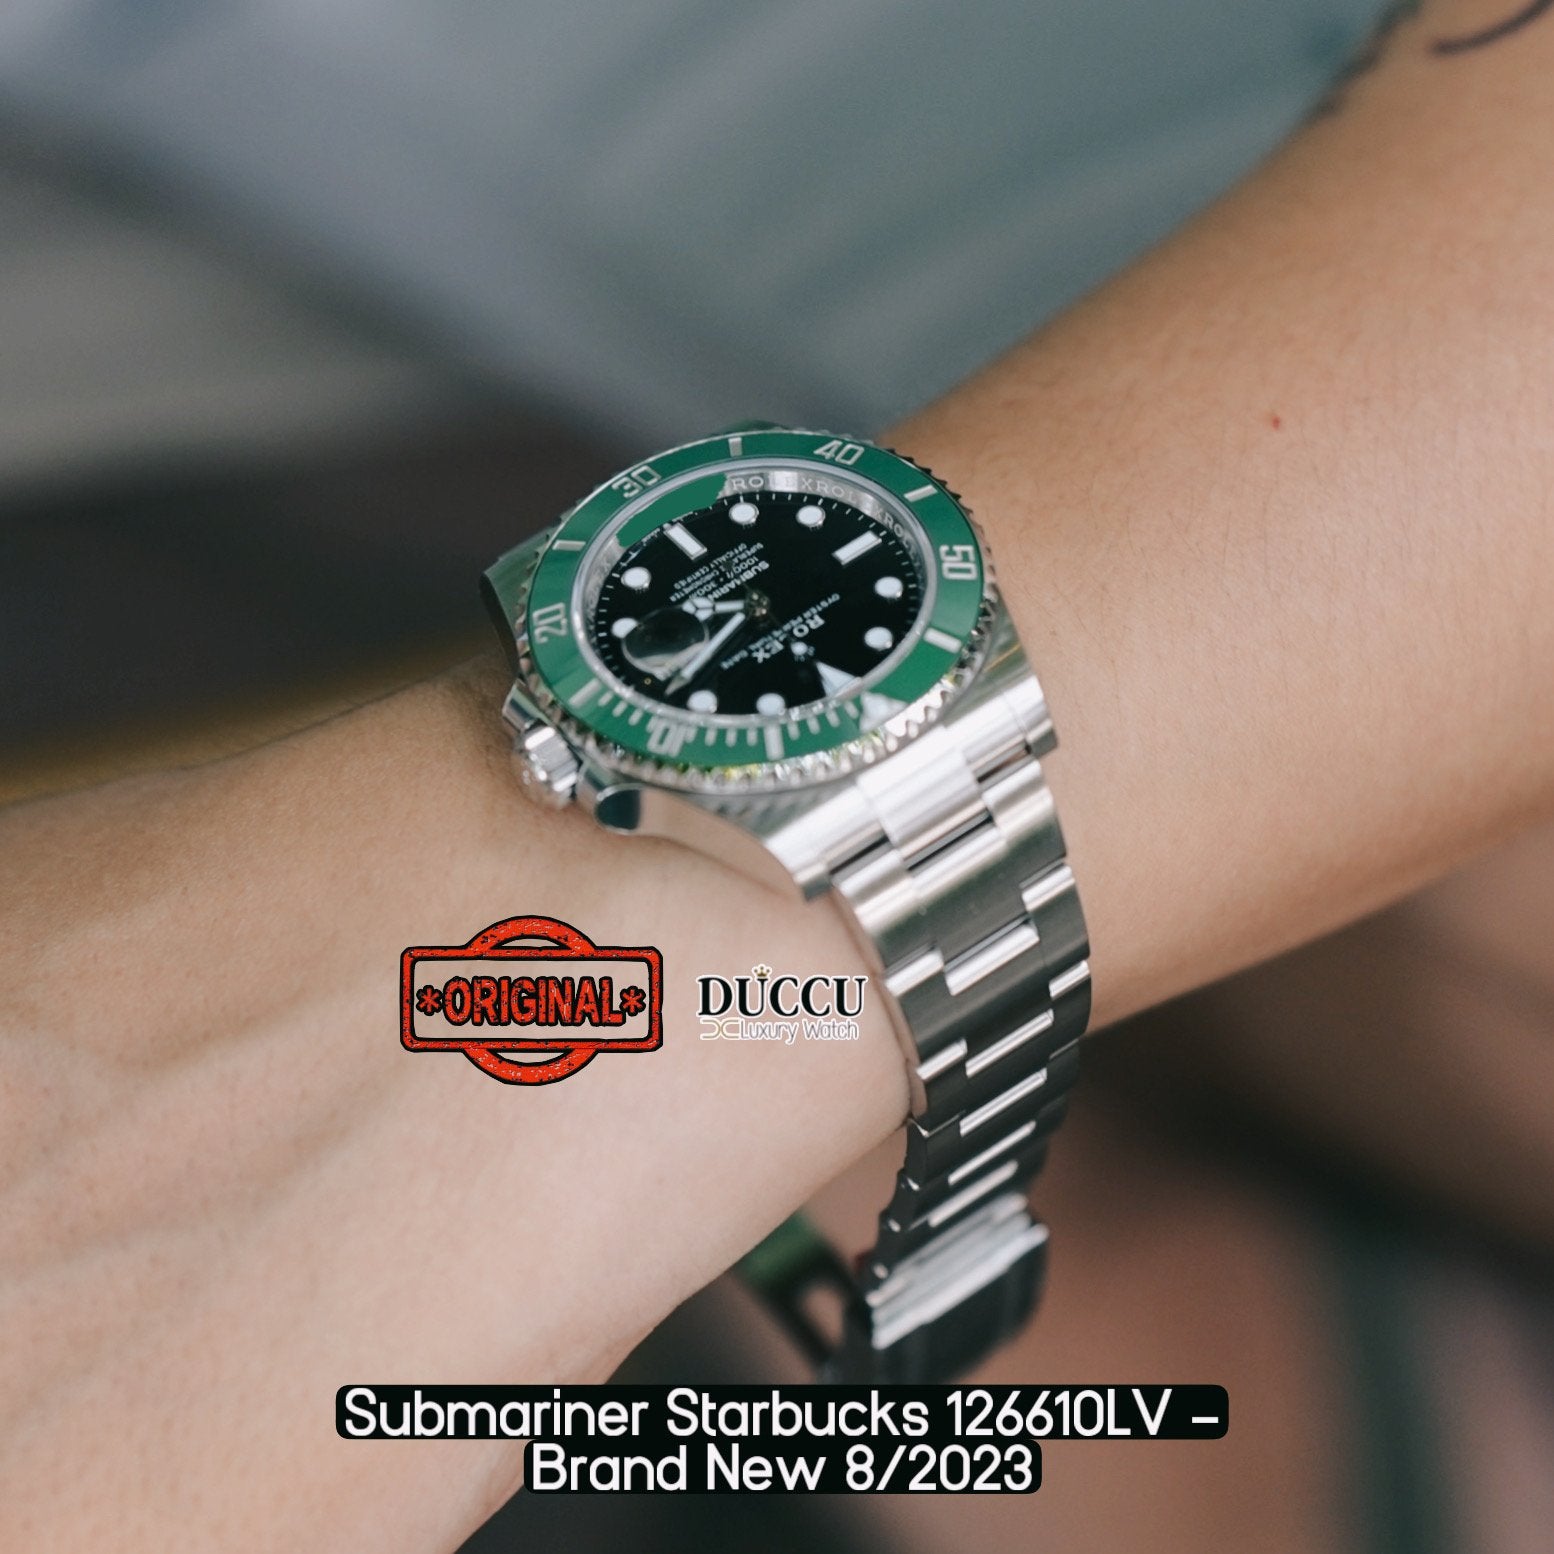 BNIB Rolex Submariner Starbucks 126610LV - 8/2023